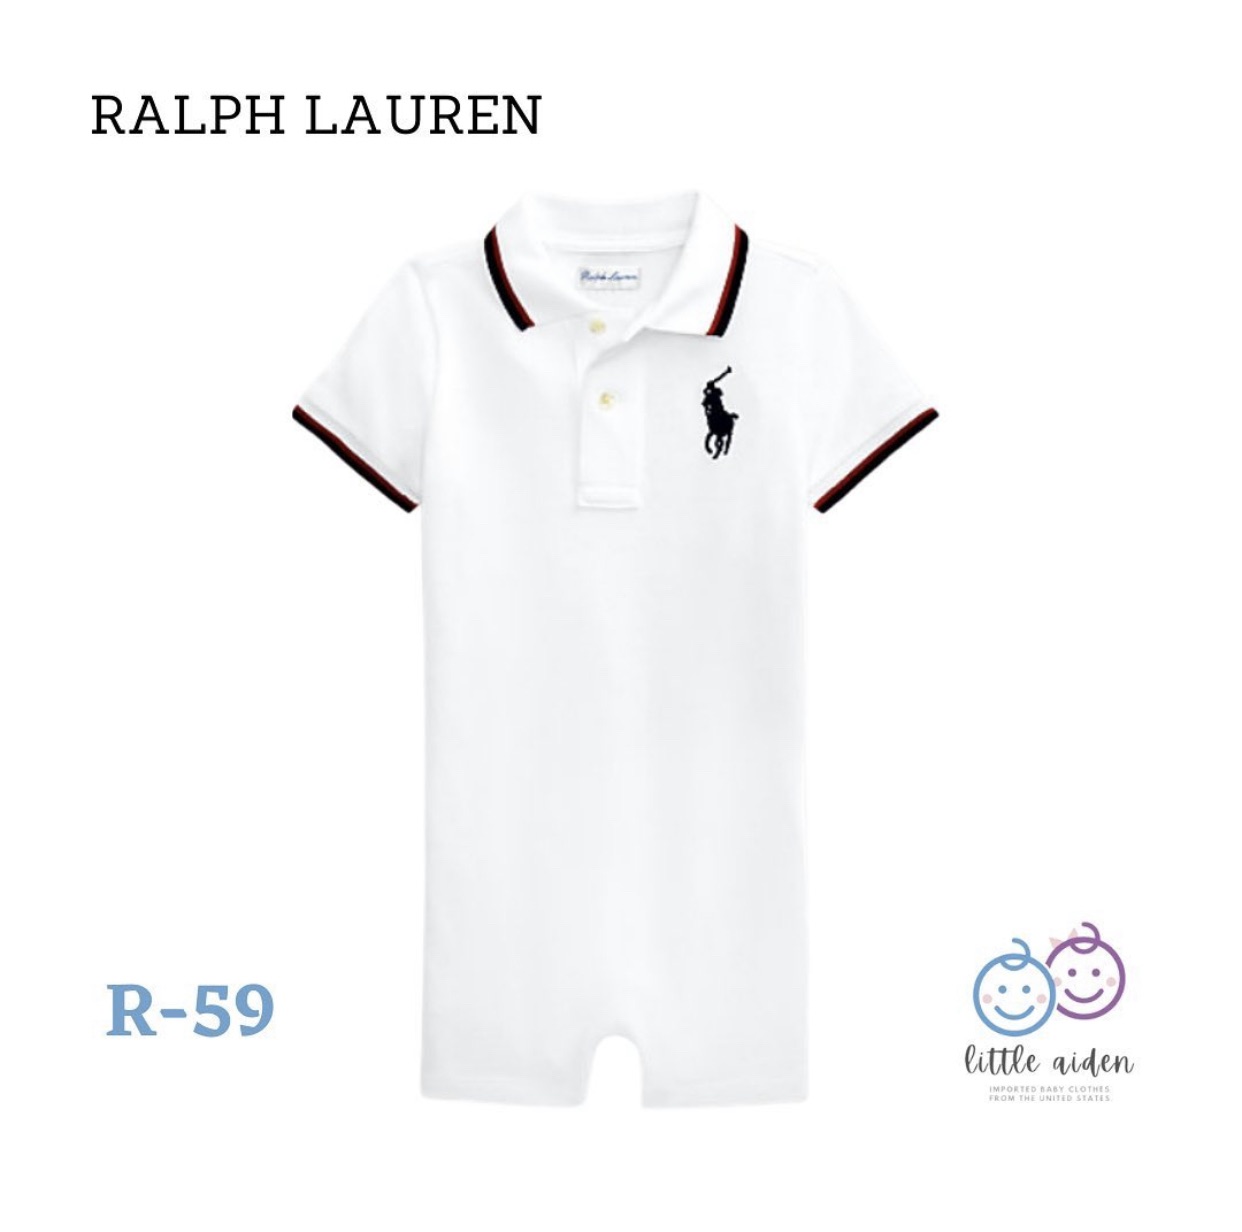 Buy Ralph Lauren Top Products at Best Prices online 